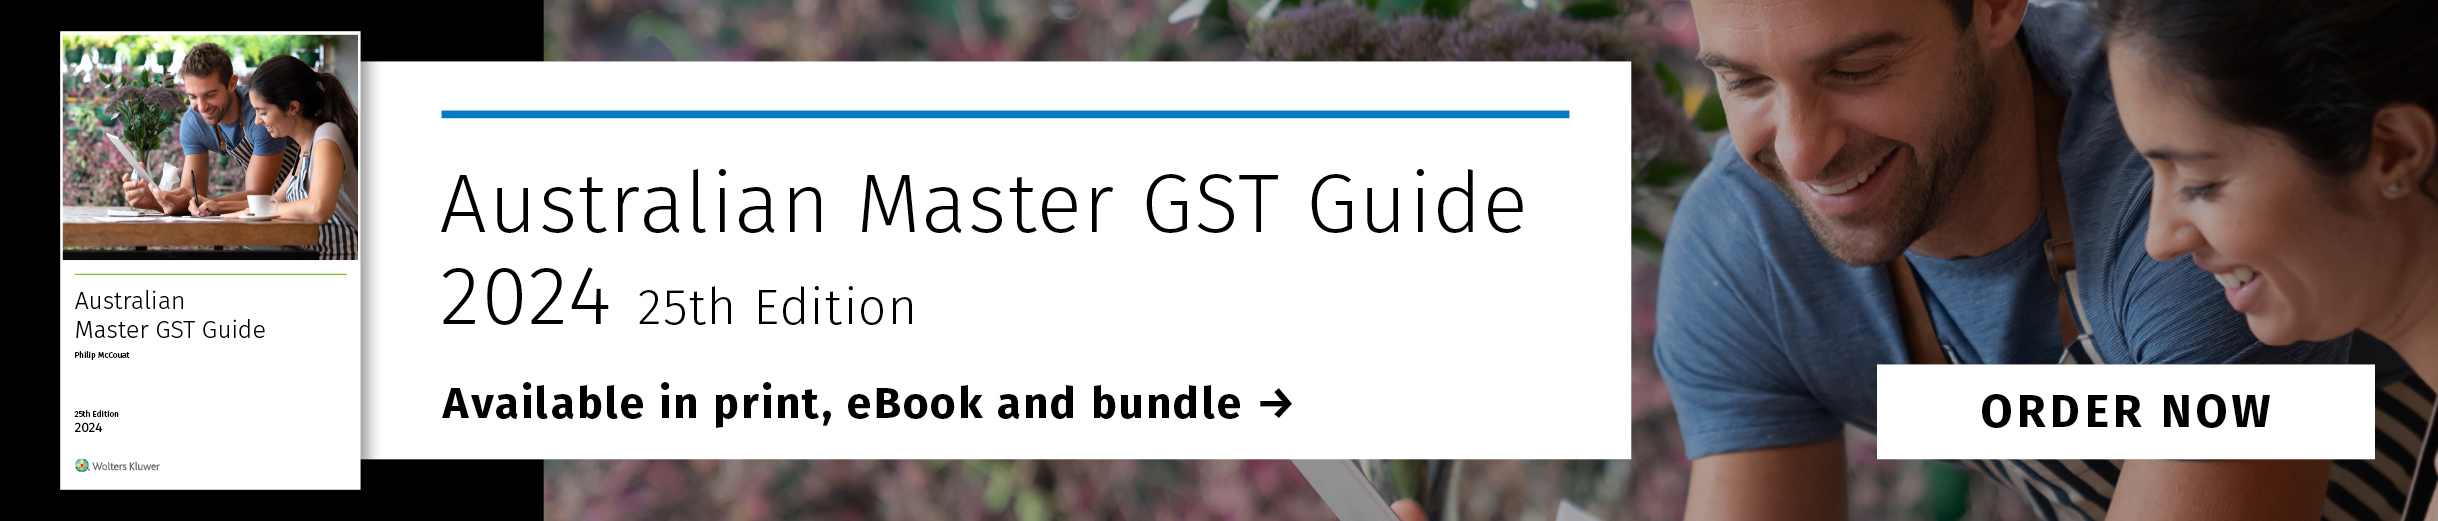 Australian Master GST Guide 2024 -25th Edition